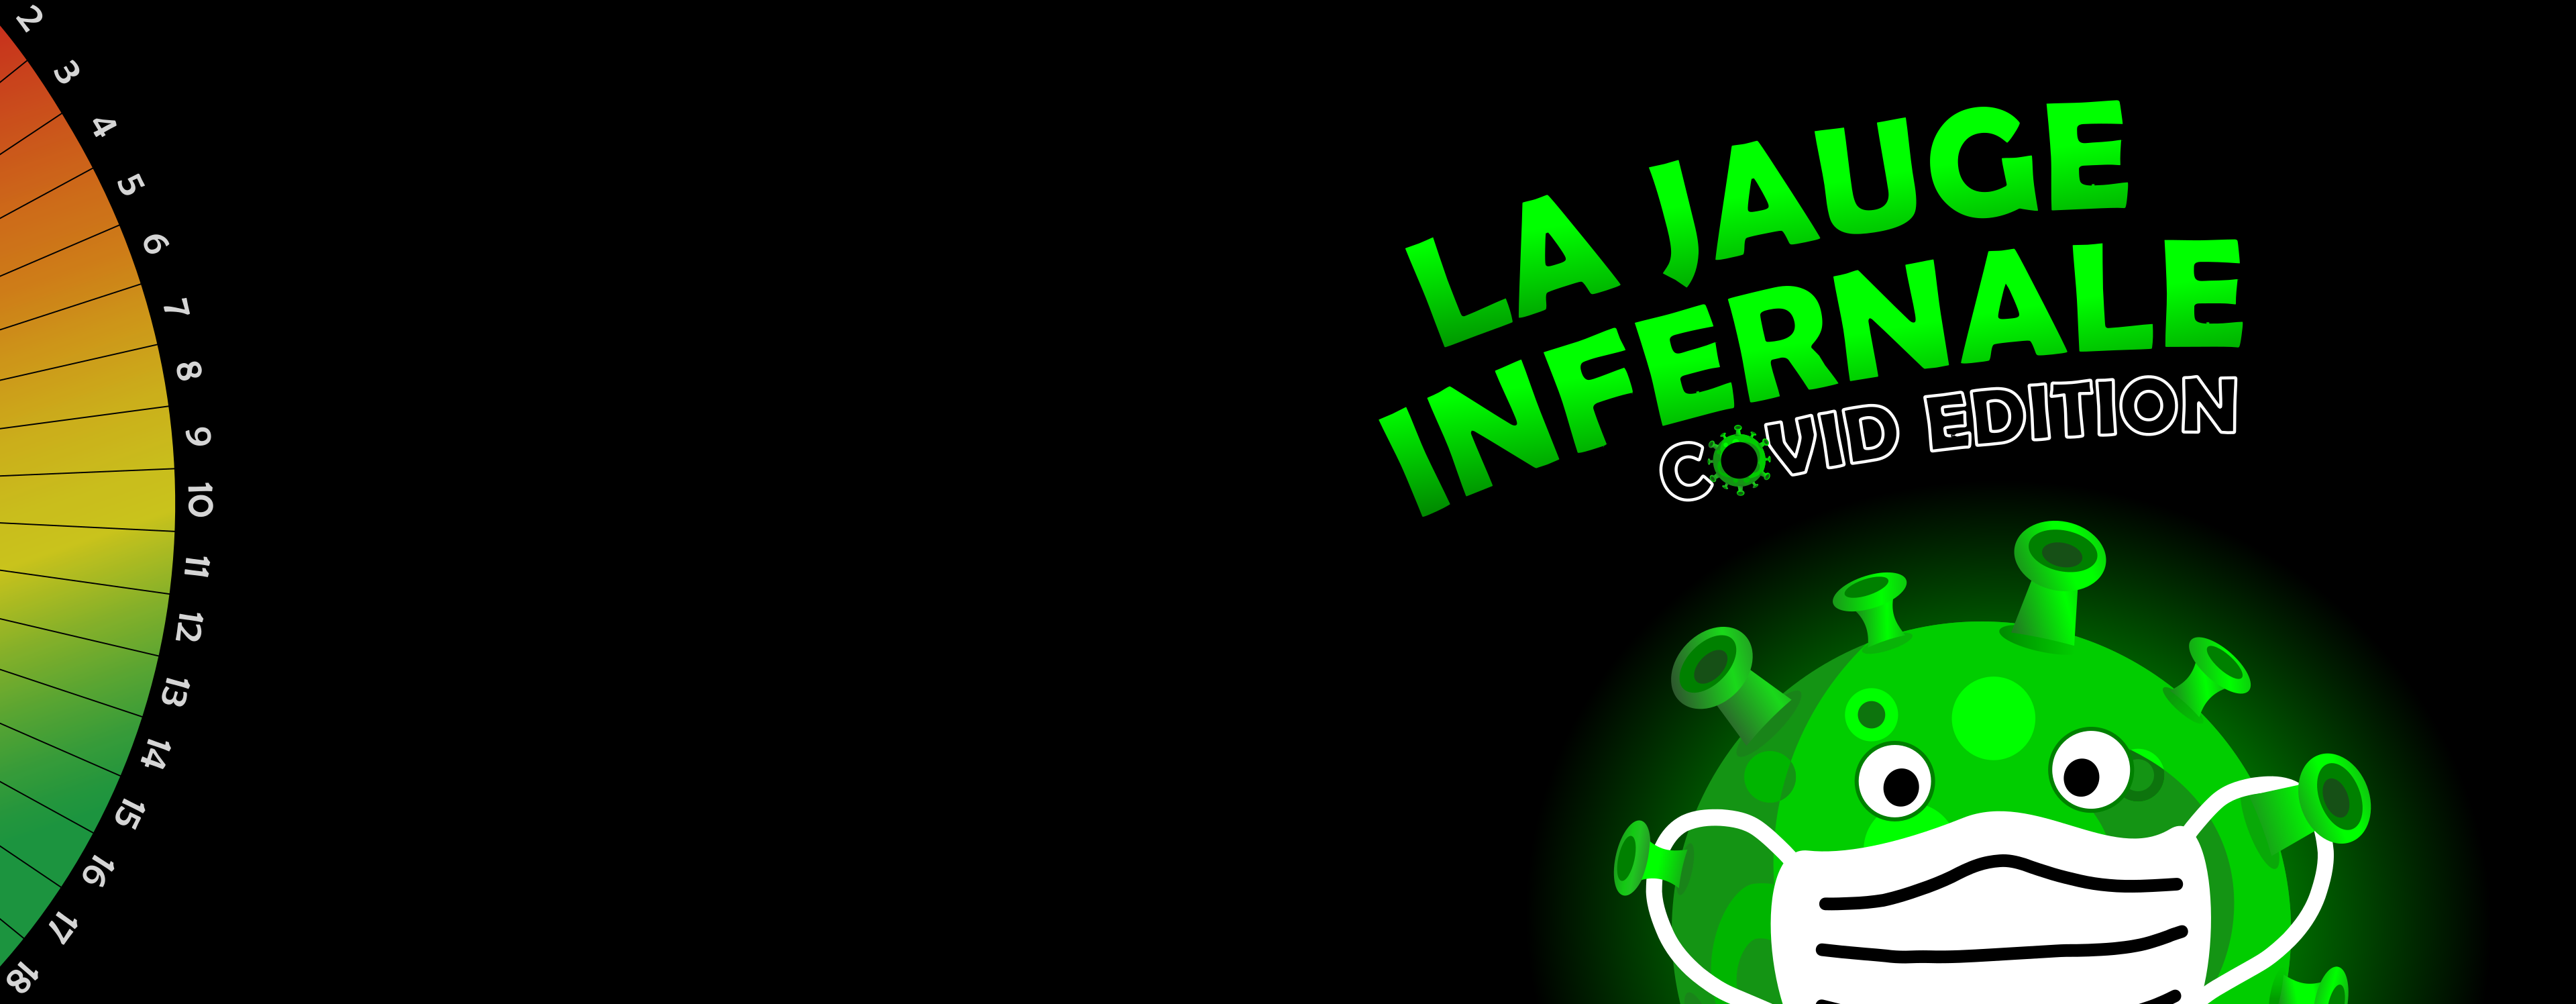 La Jauge Infernale Covid Edition Opsylon Games